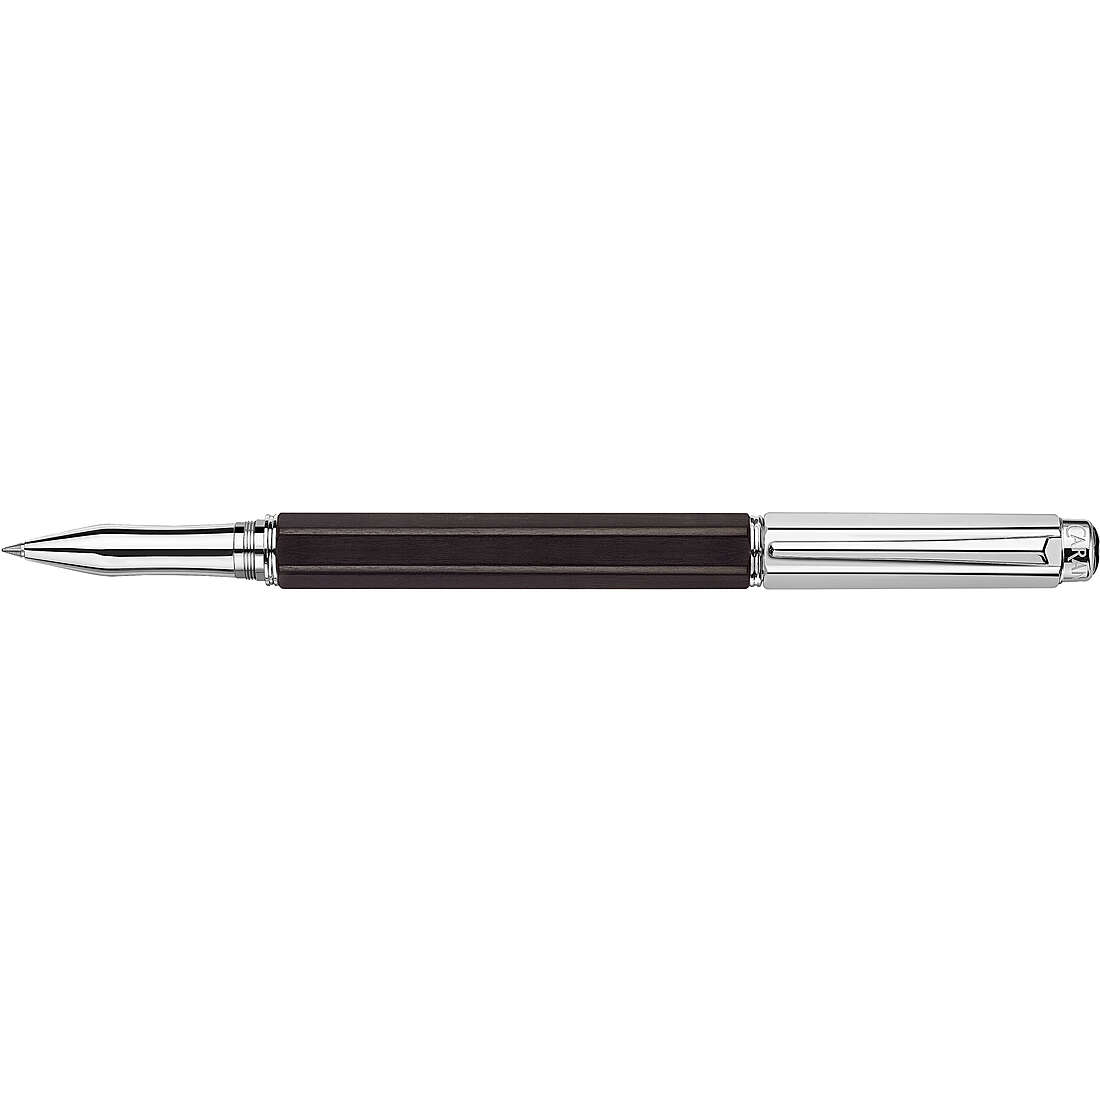 Stift mit Gravur Caran D'Ache Varius ebony black für mann A4470086